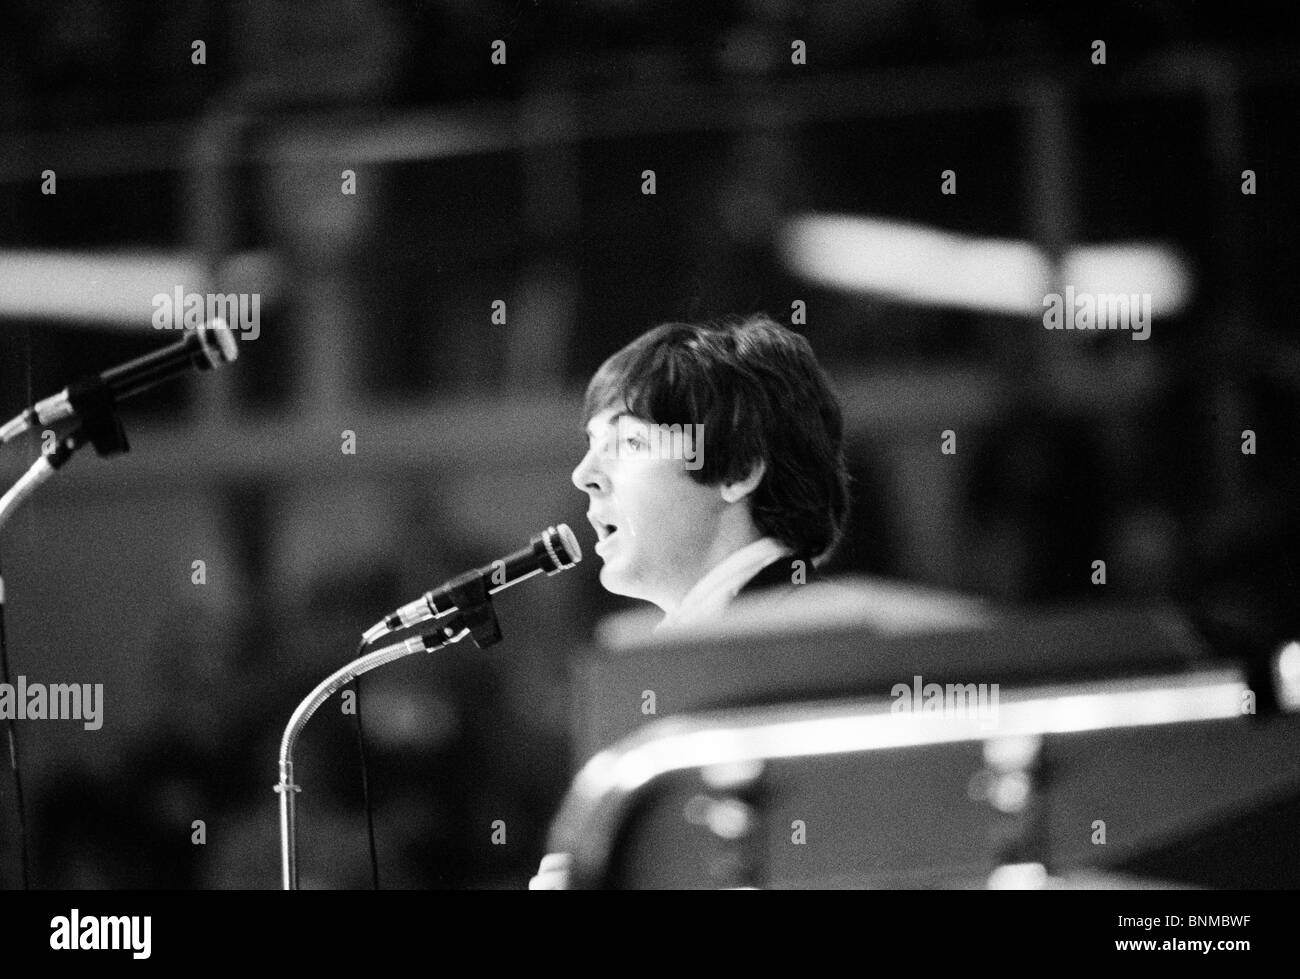 La musica dei Beatles gruppo pop band un concerto Germania Essen 1966 Paul McCartney cantante Foto Stock